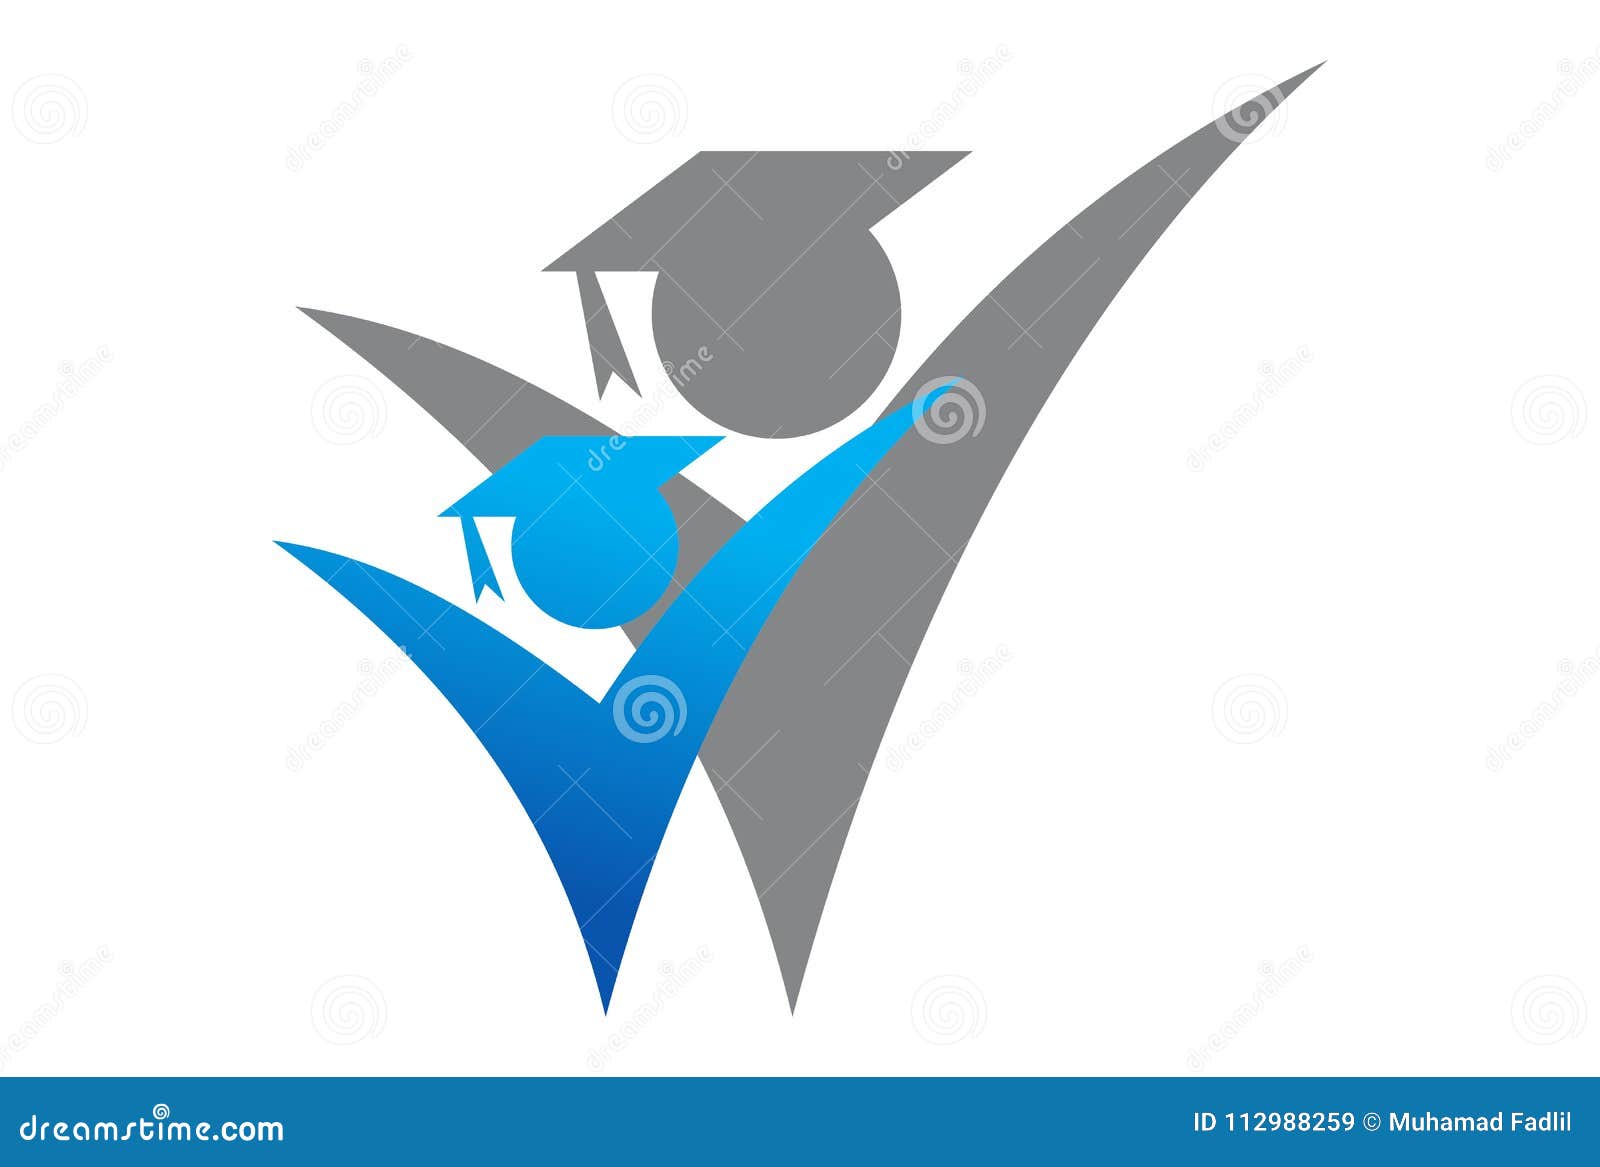 Graduates Logo Vector Stock Vector Illustration Of Icon 112988259